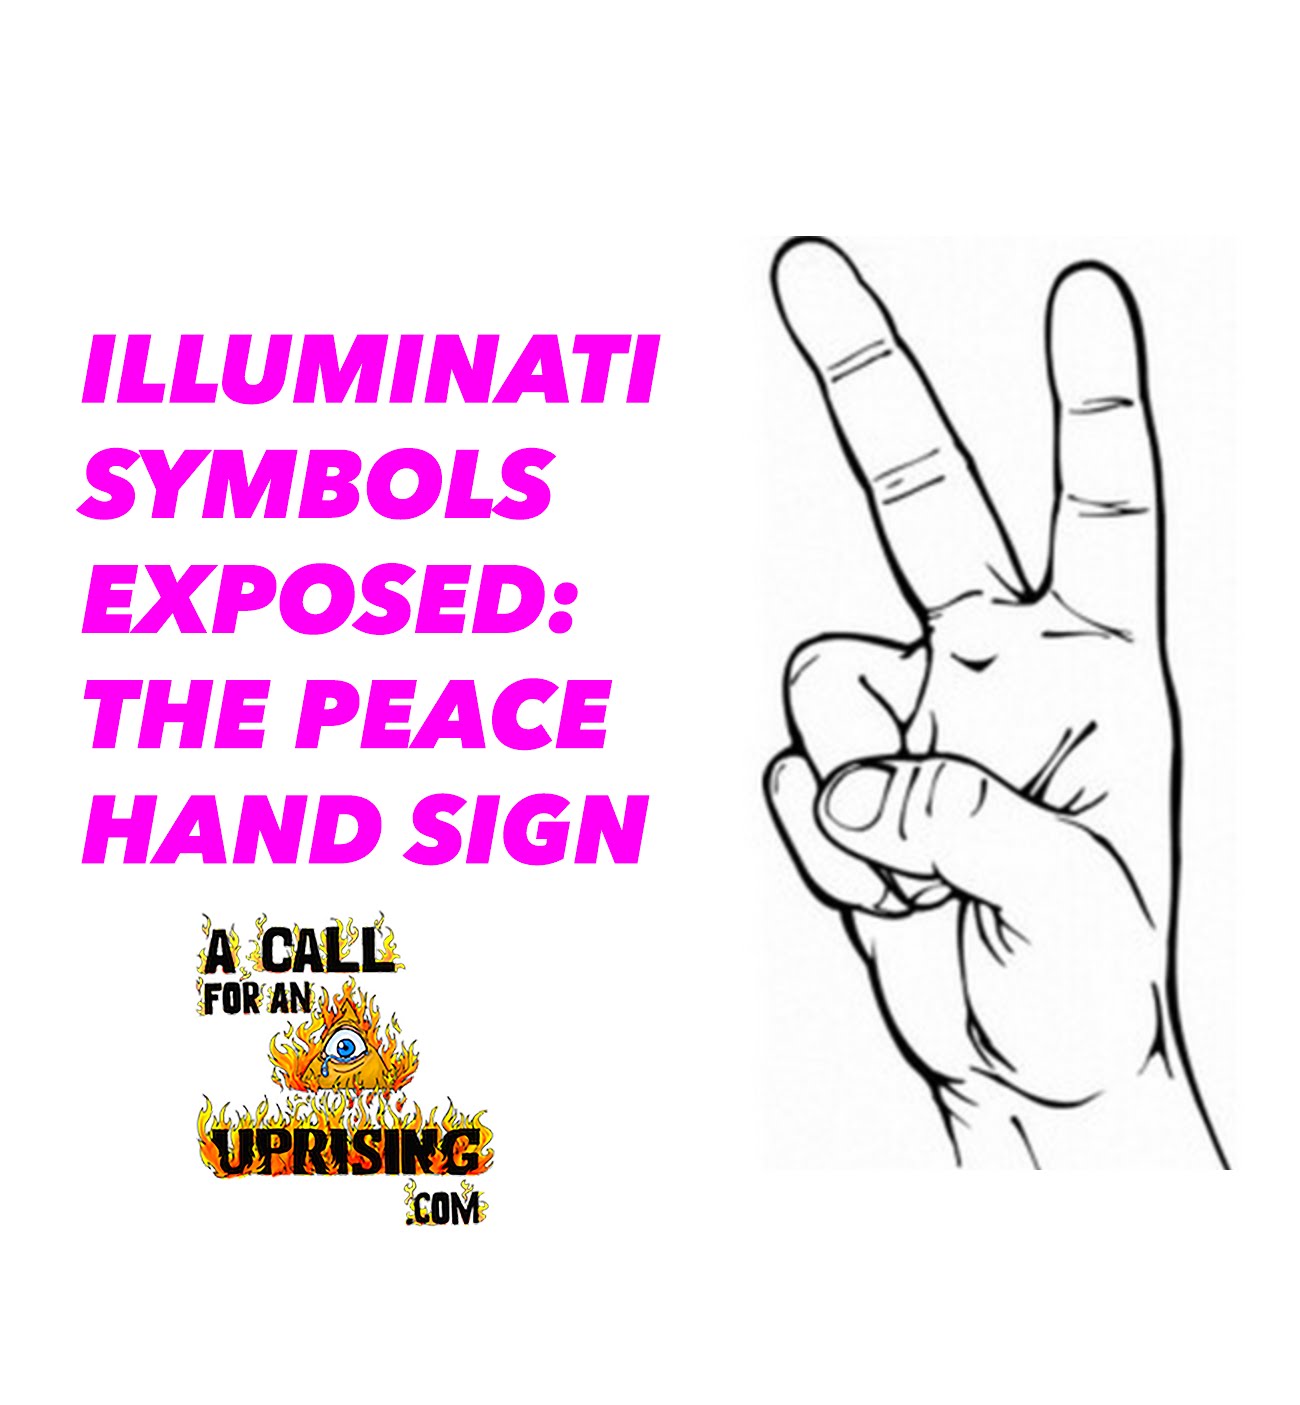 ILLUMINATI SYMBOLS EXPOSED: THE PEACE HAND SIGN!